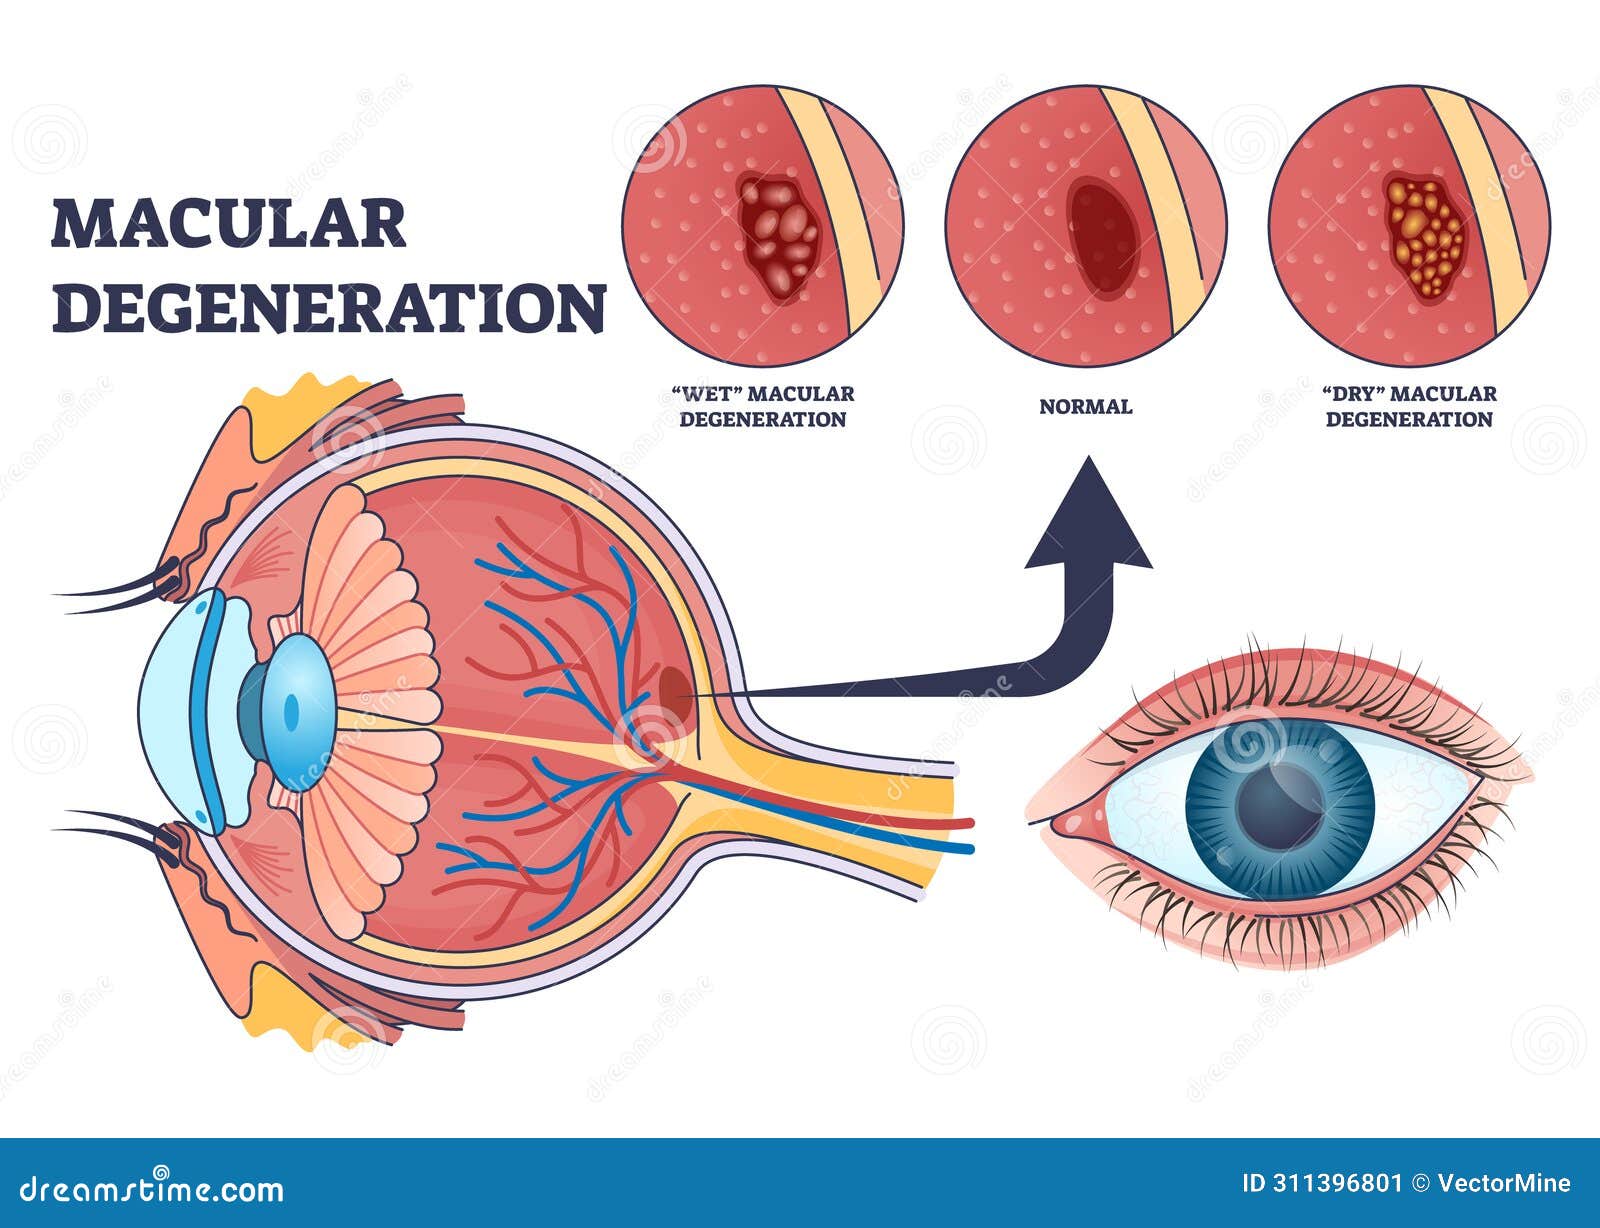 macular degeneration as eye illness and eyesight problem outline diagram